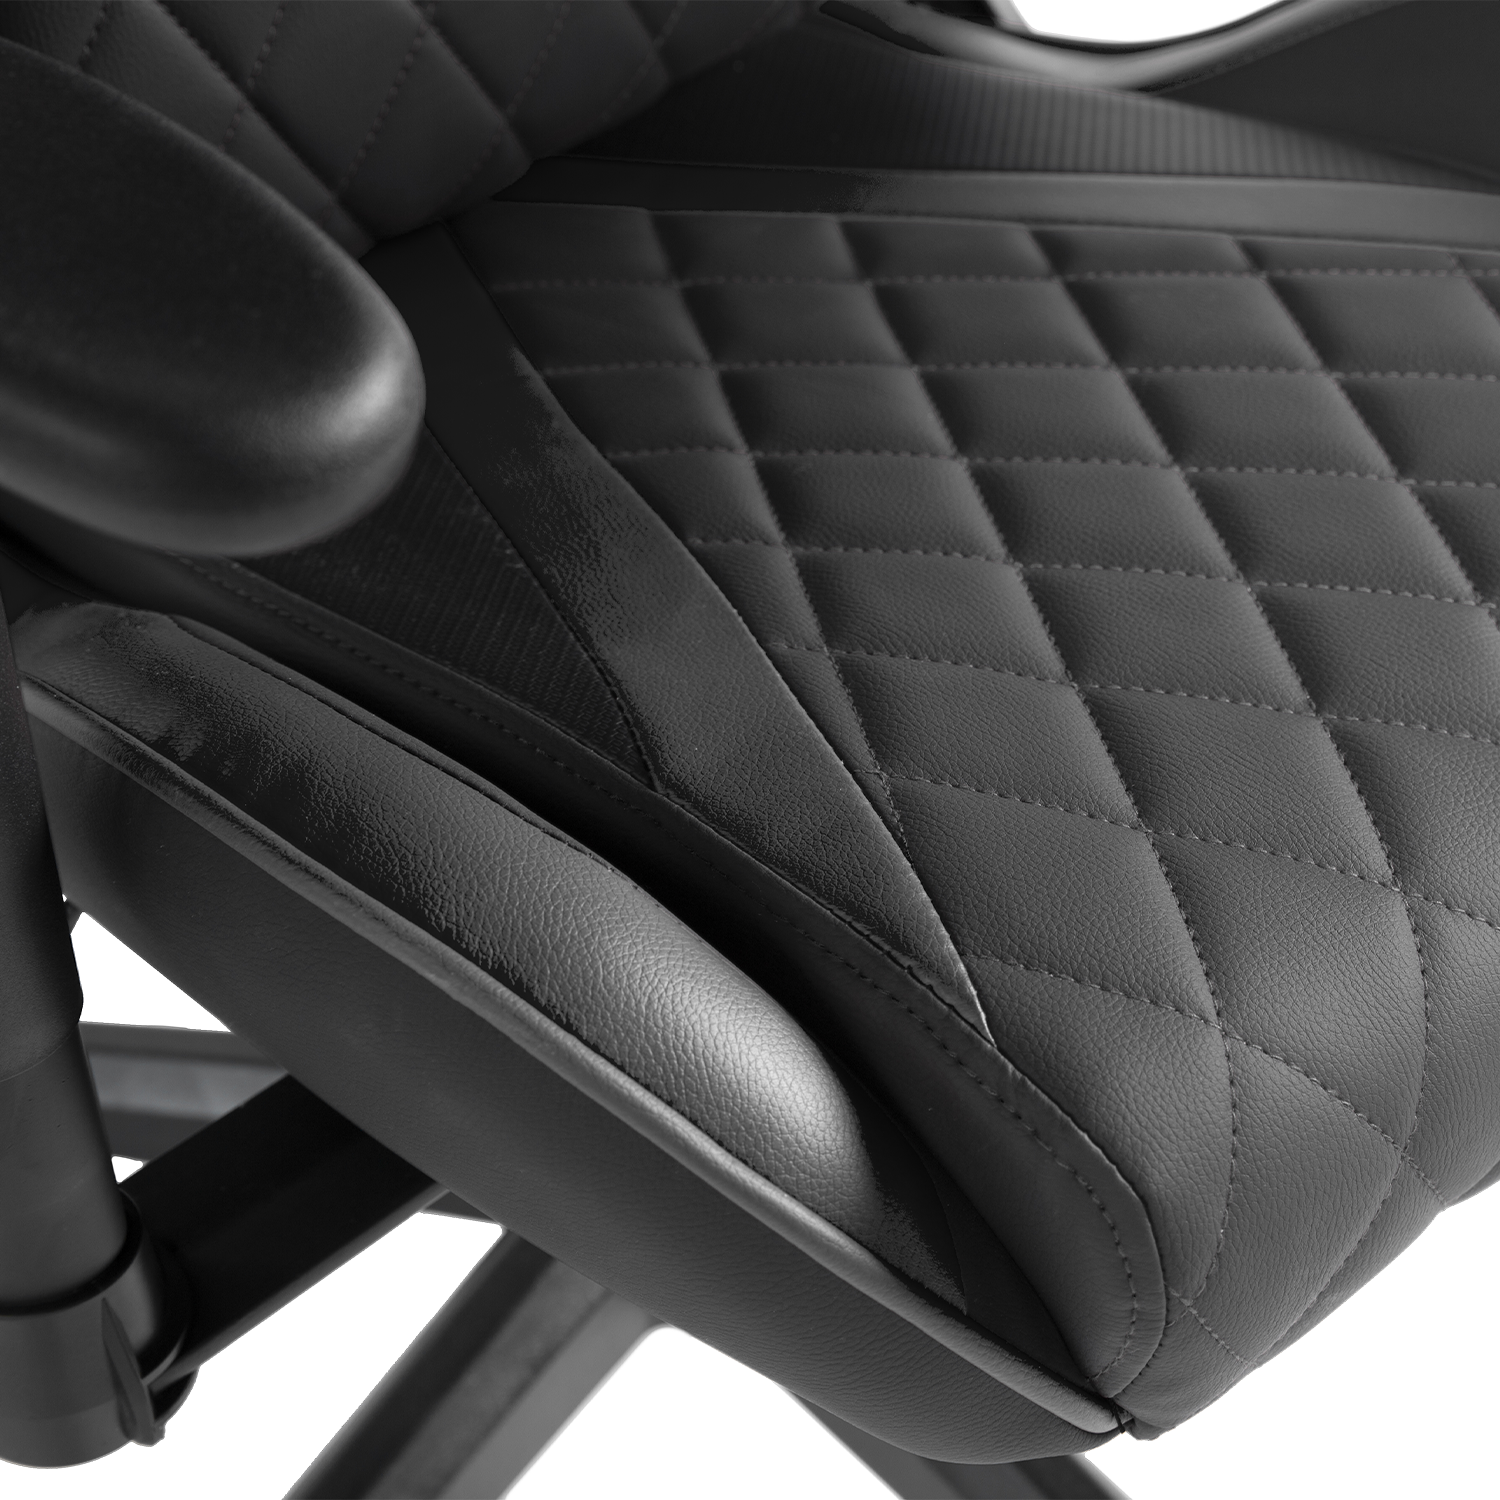 Cadeira Gamer Redragon Gaia C211-B - Preto